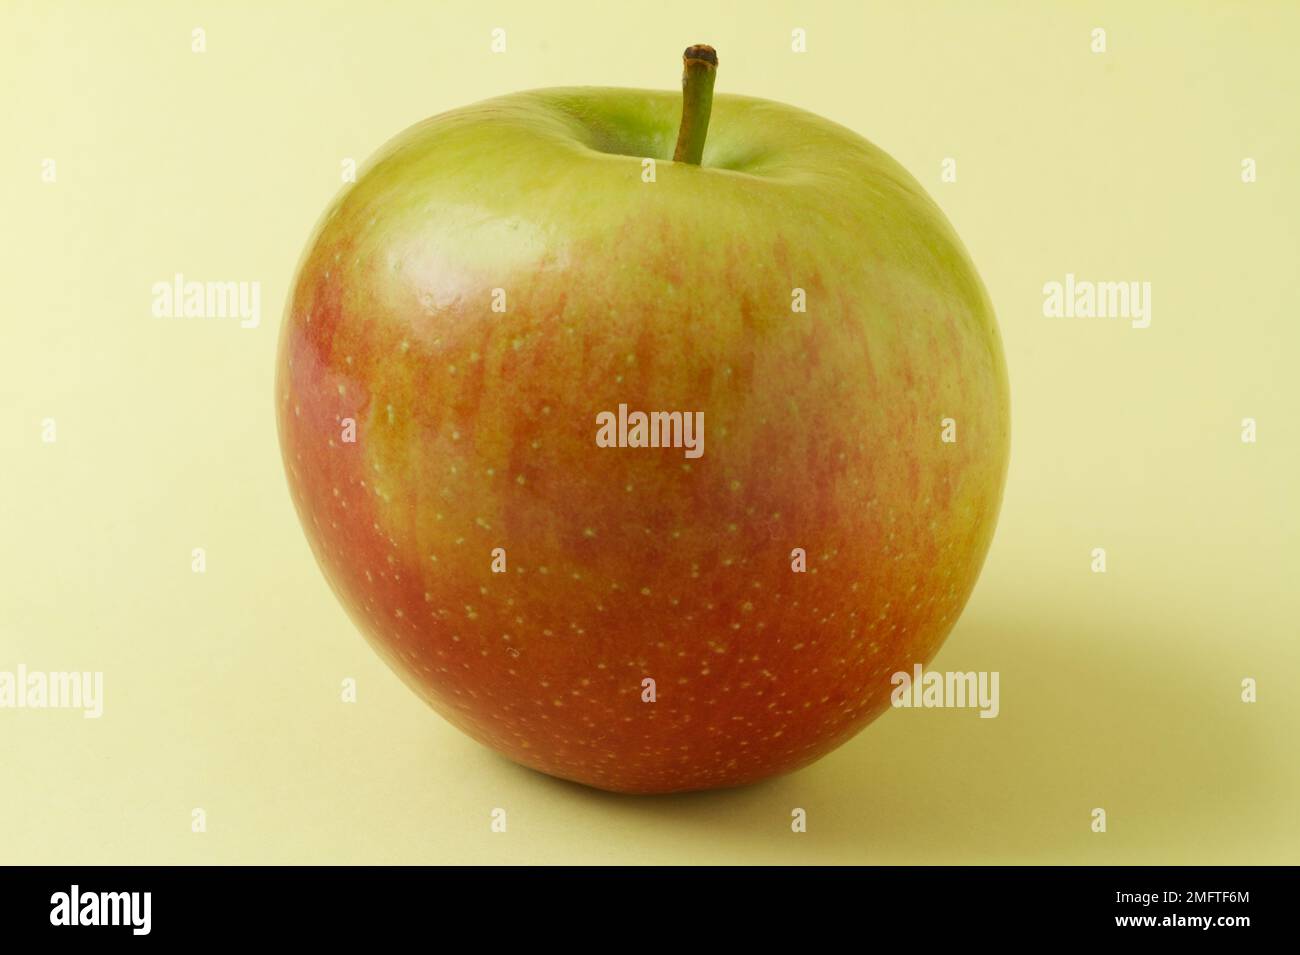 Close up of one Braeburn apple on a plain background Stock Photo